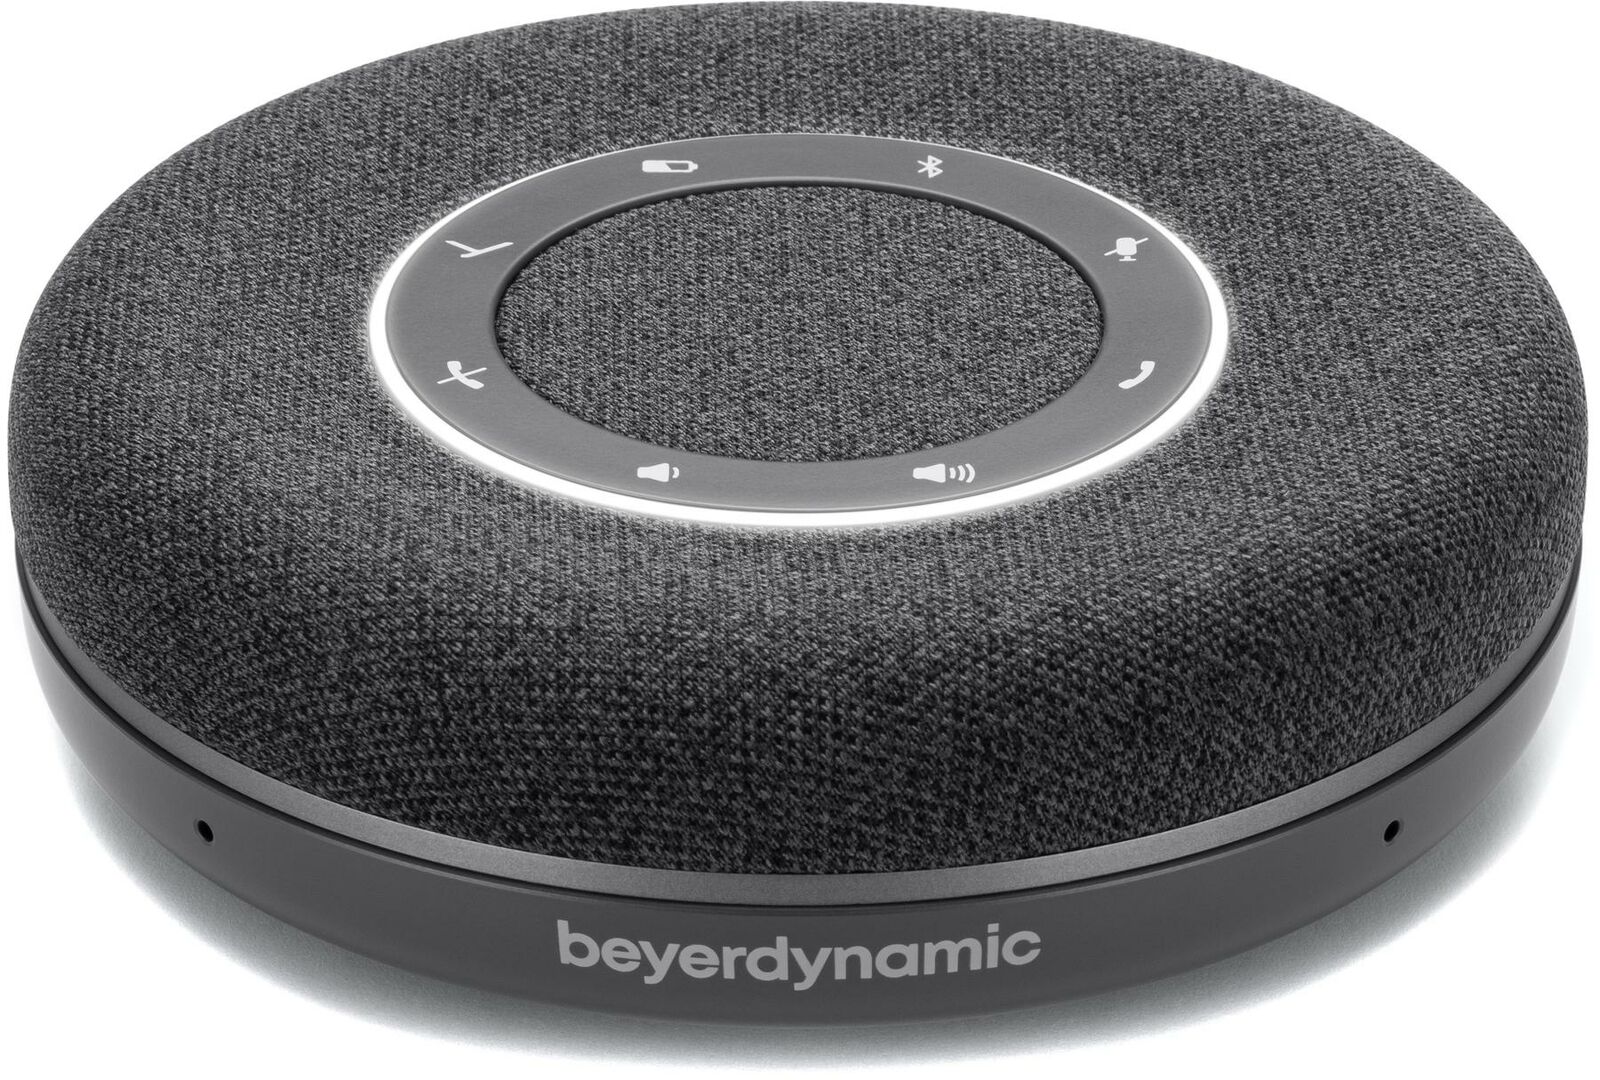 Beyerdynamic Space Bluetooth/USB Speakerphone (Charcoal) + LCD Screen Cleaner